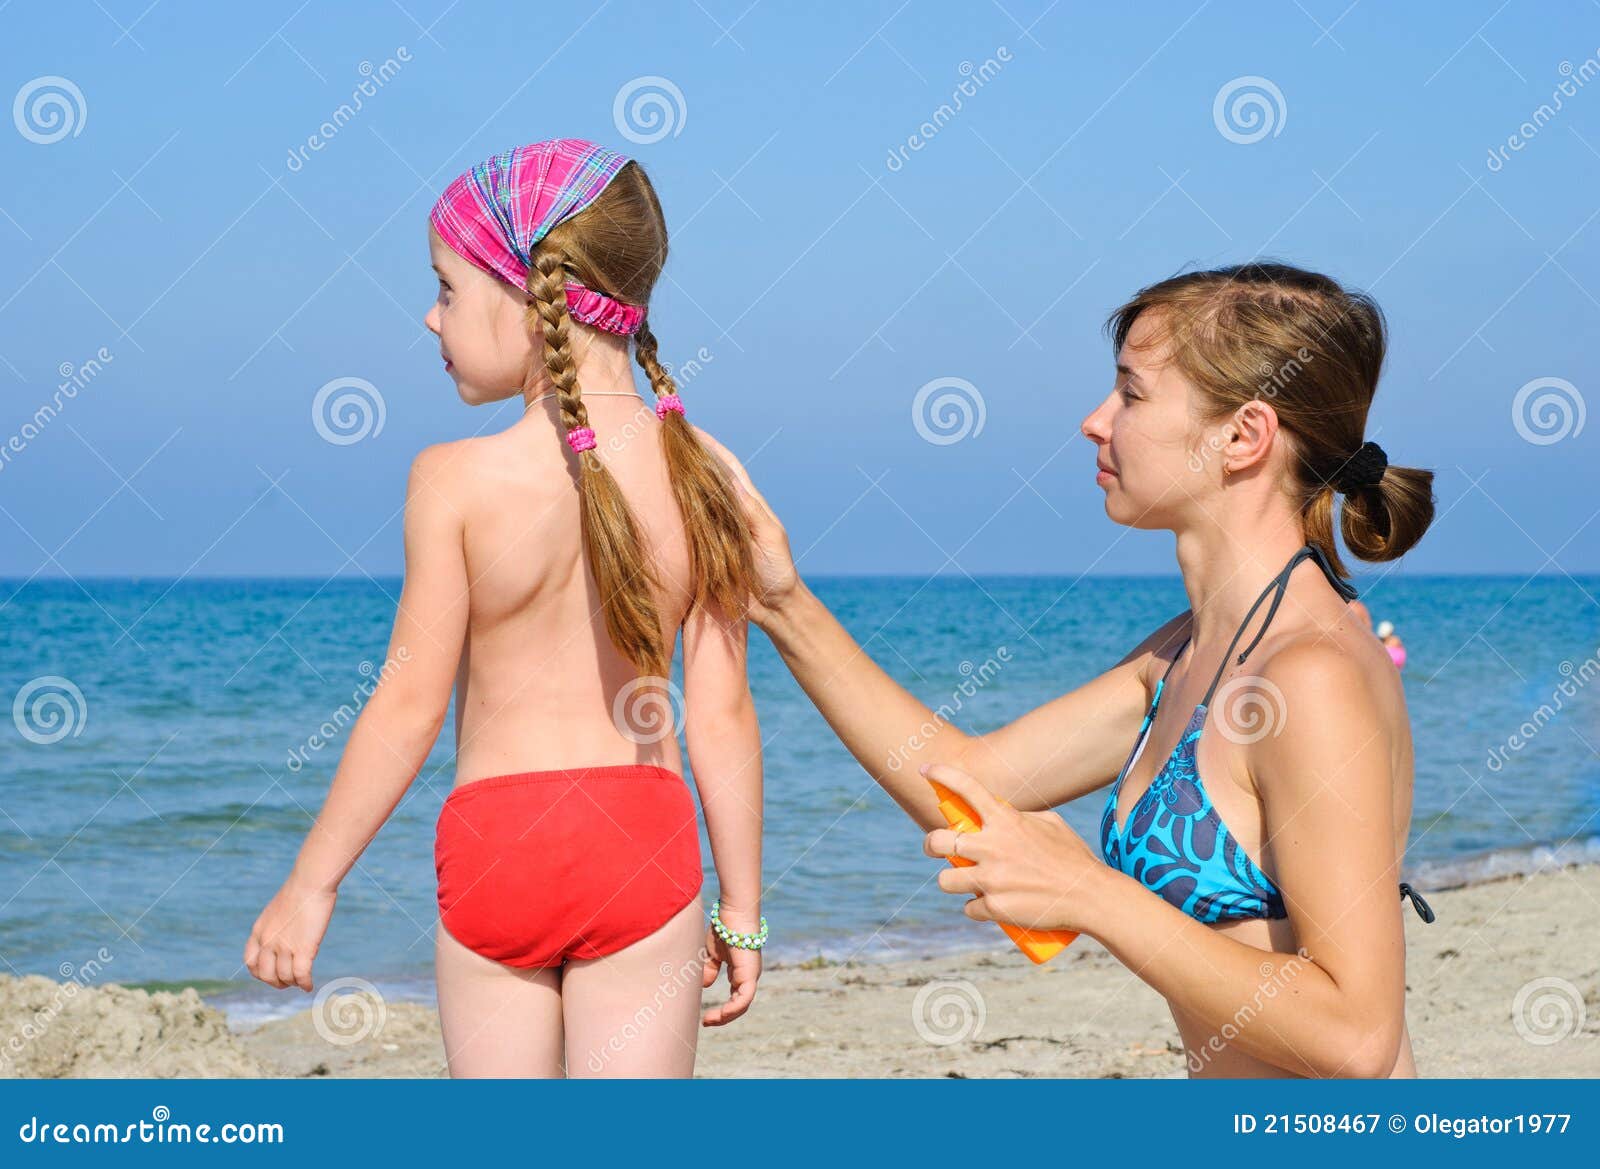 мама и дочка на голом пляже фото 98